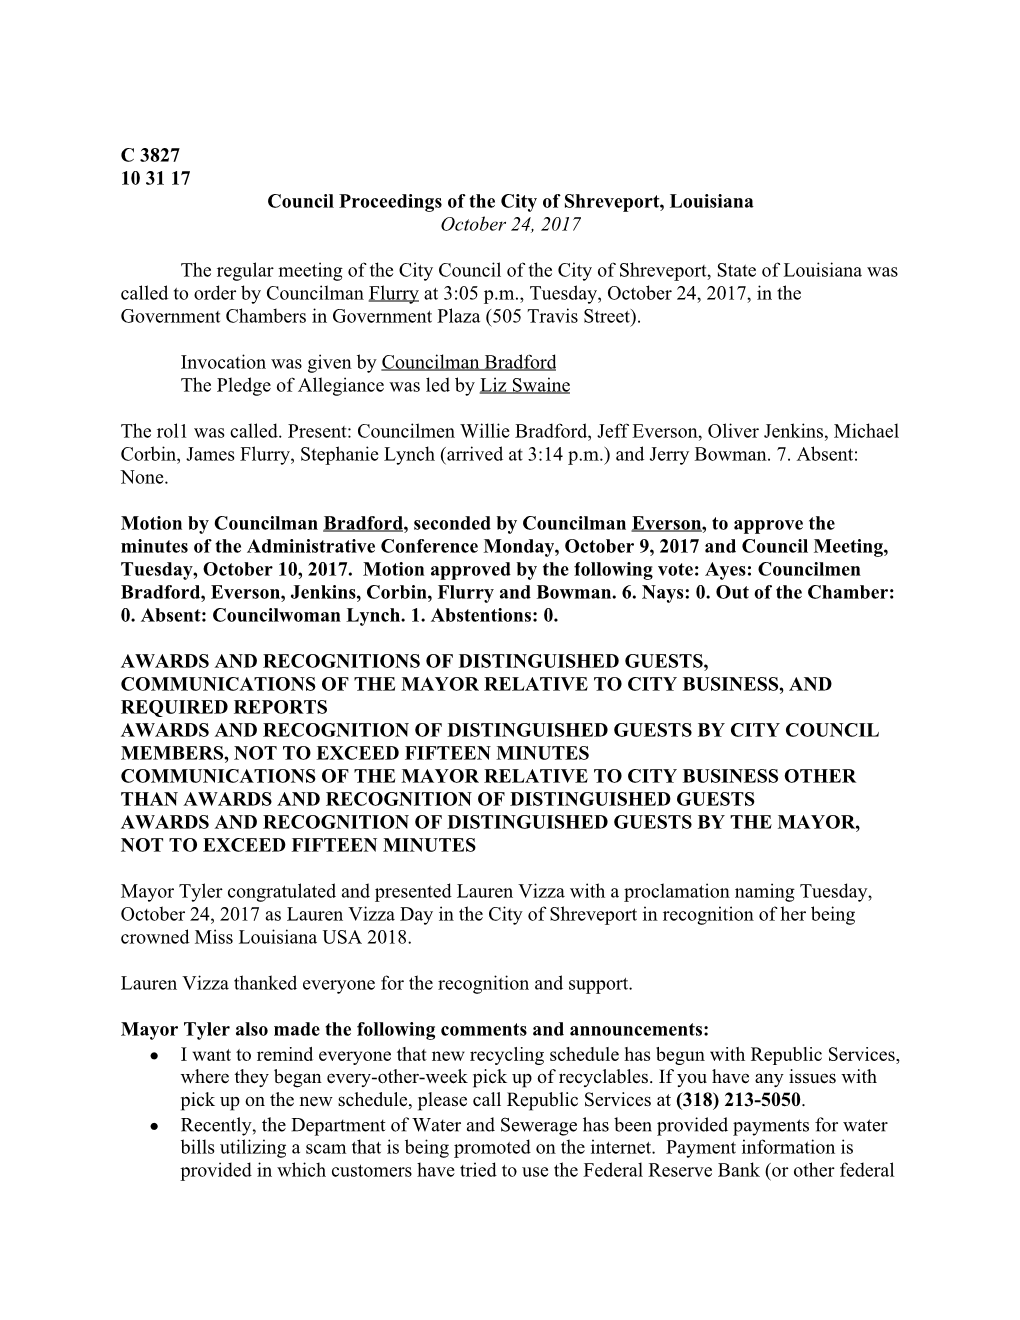 C 3827 10 31 17 Council Proceedings of the City of Shreveport, Louisiana October 24, 2017